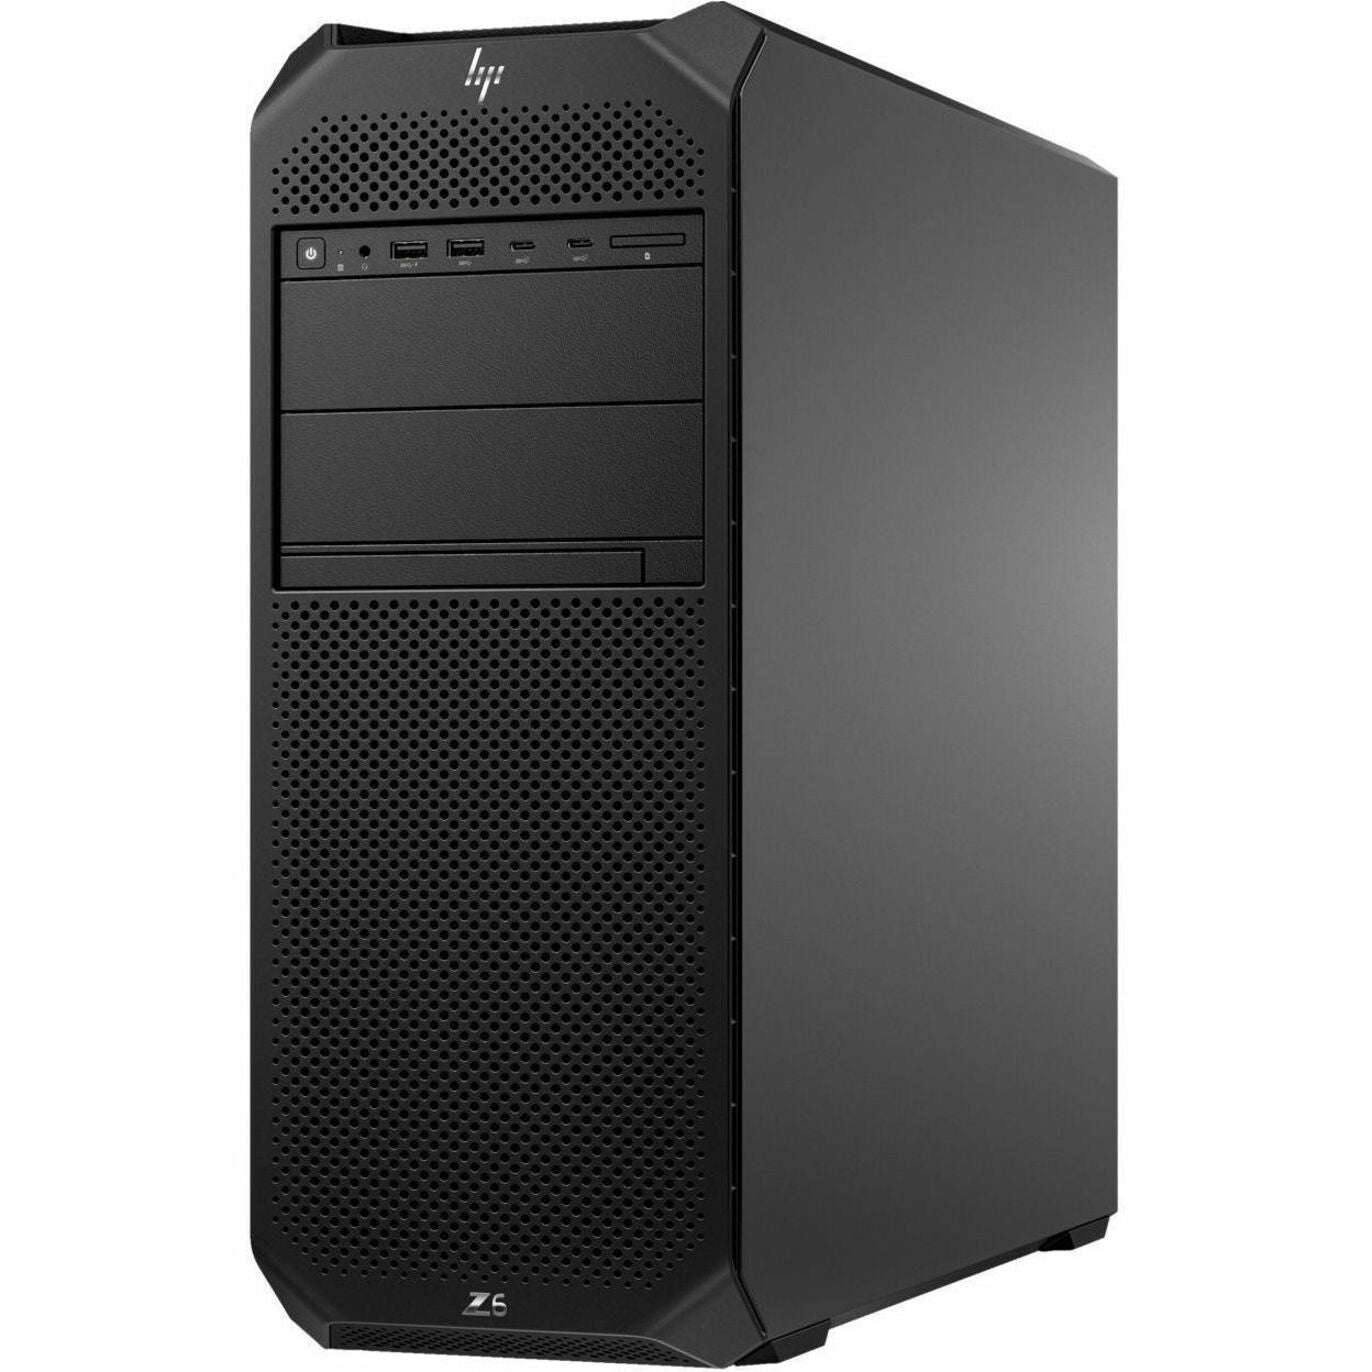 HP Z6 G5 Tower Workstation, Hexadeca-core, 32GB RAM, 512GB SSD, Windows 11 Pro